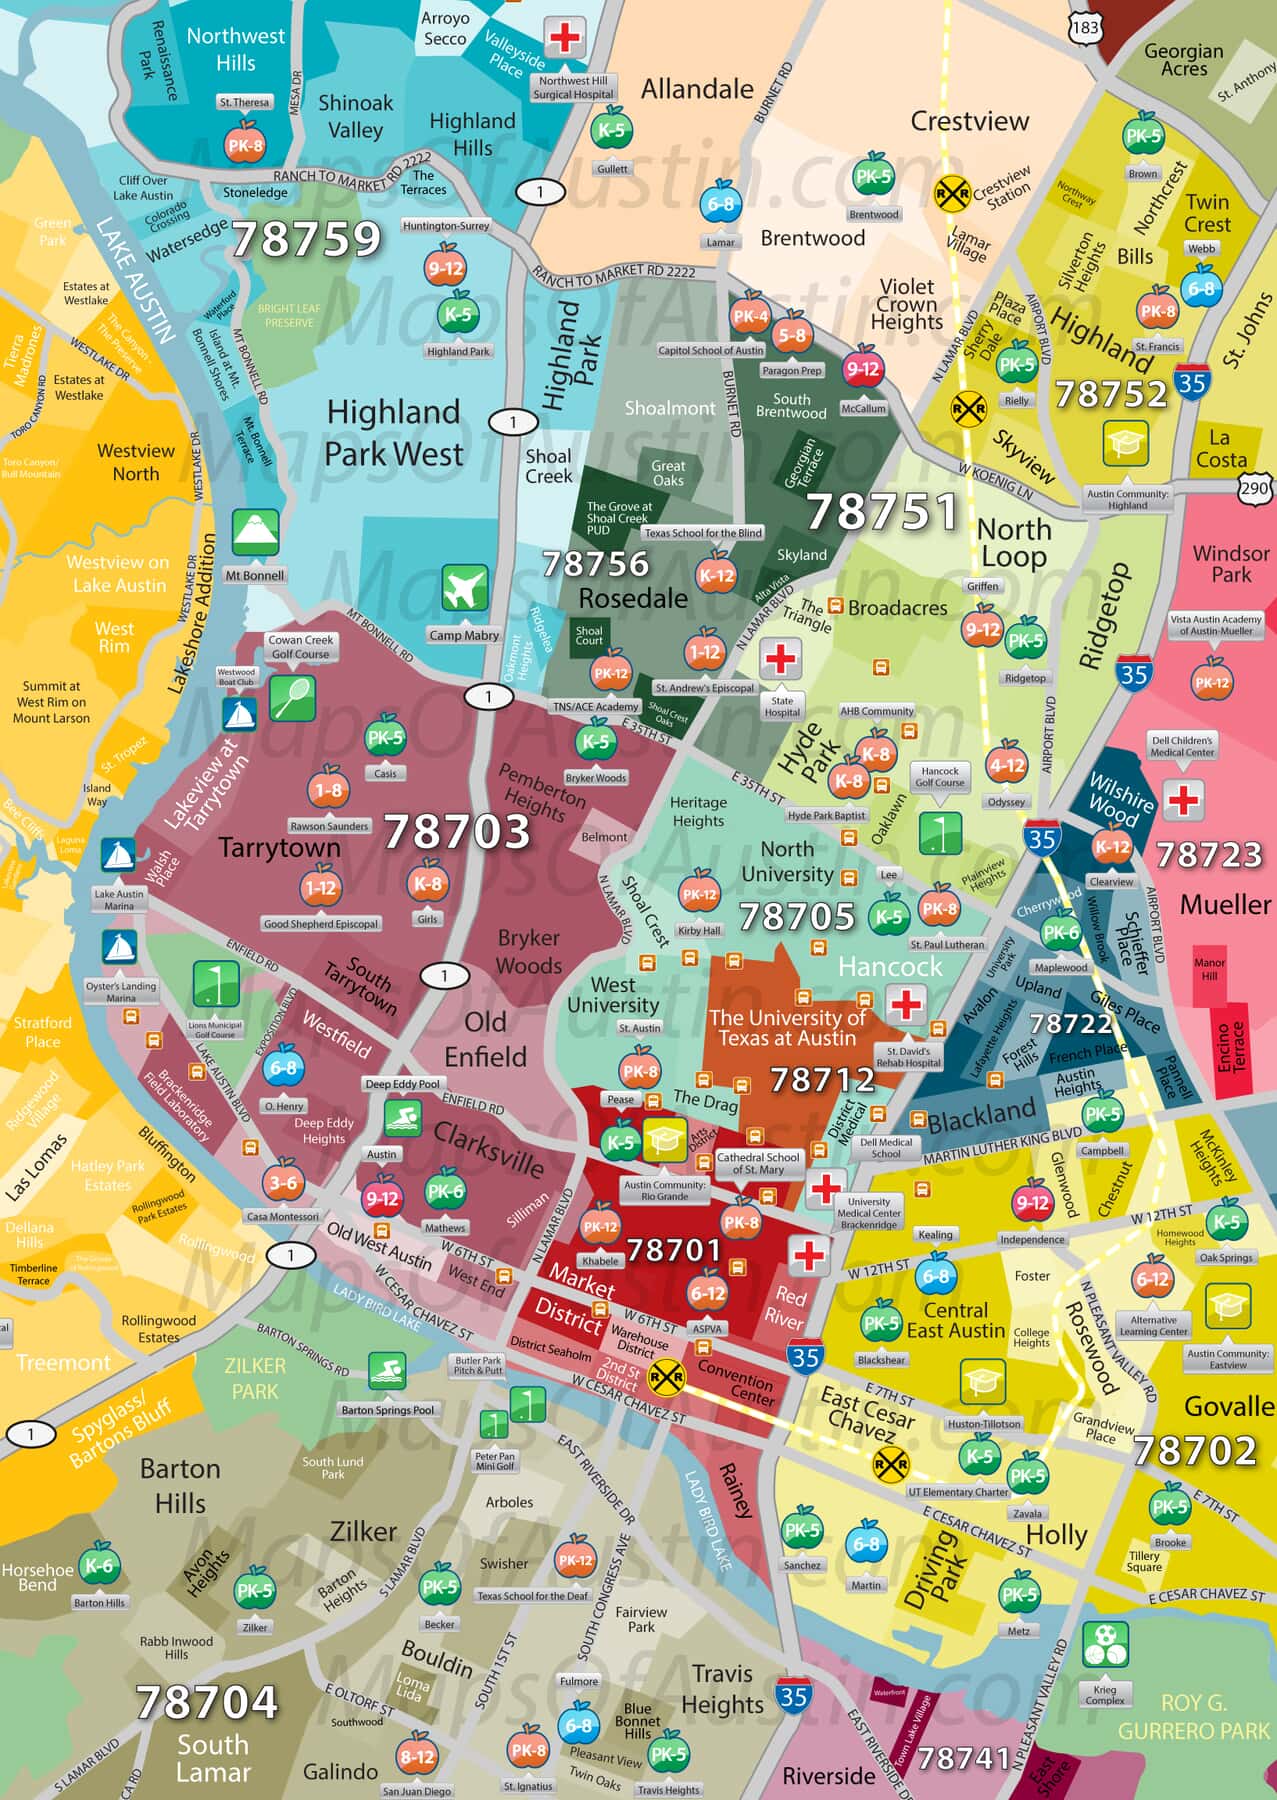 central austin, tx - central austin, tx neighborhood map